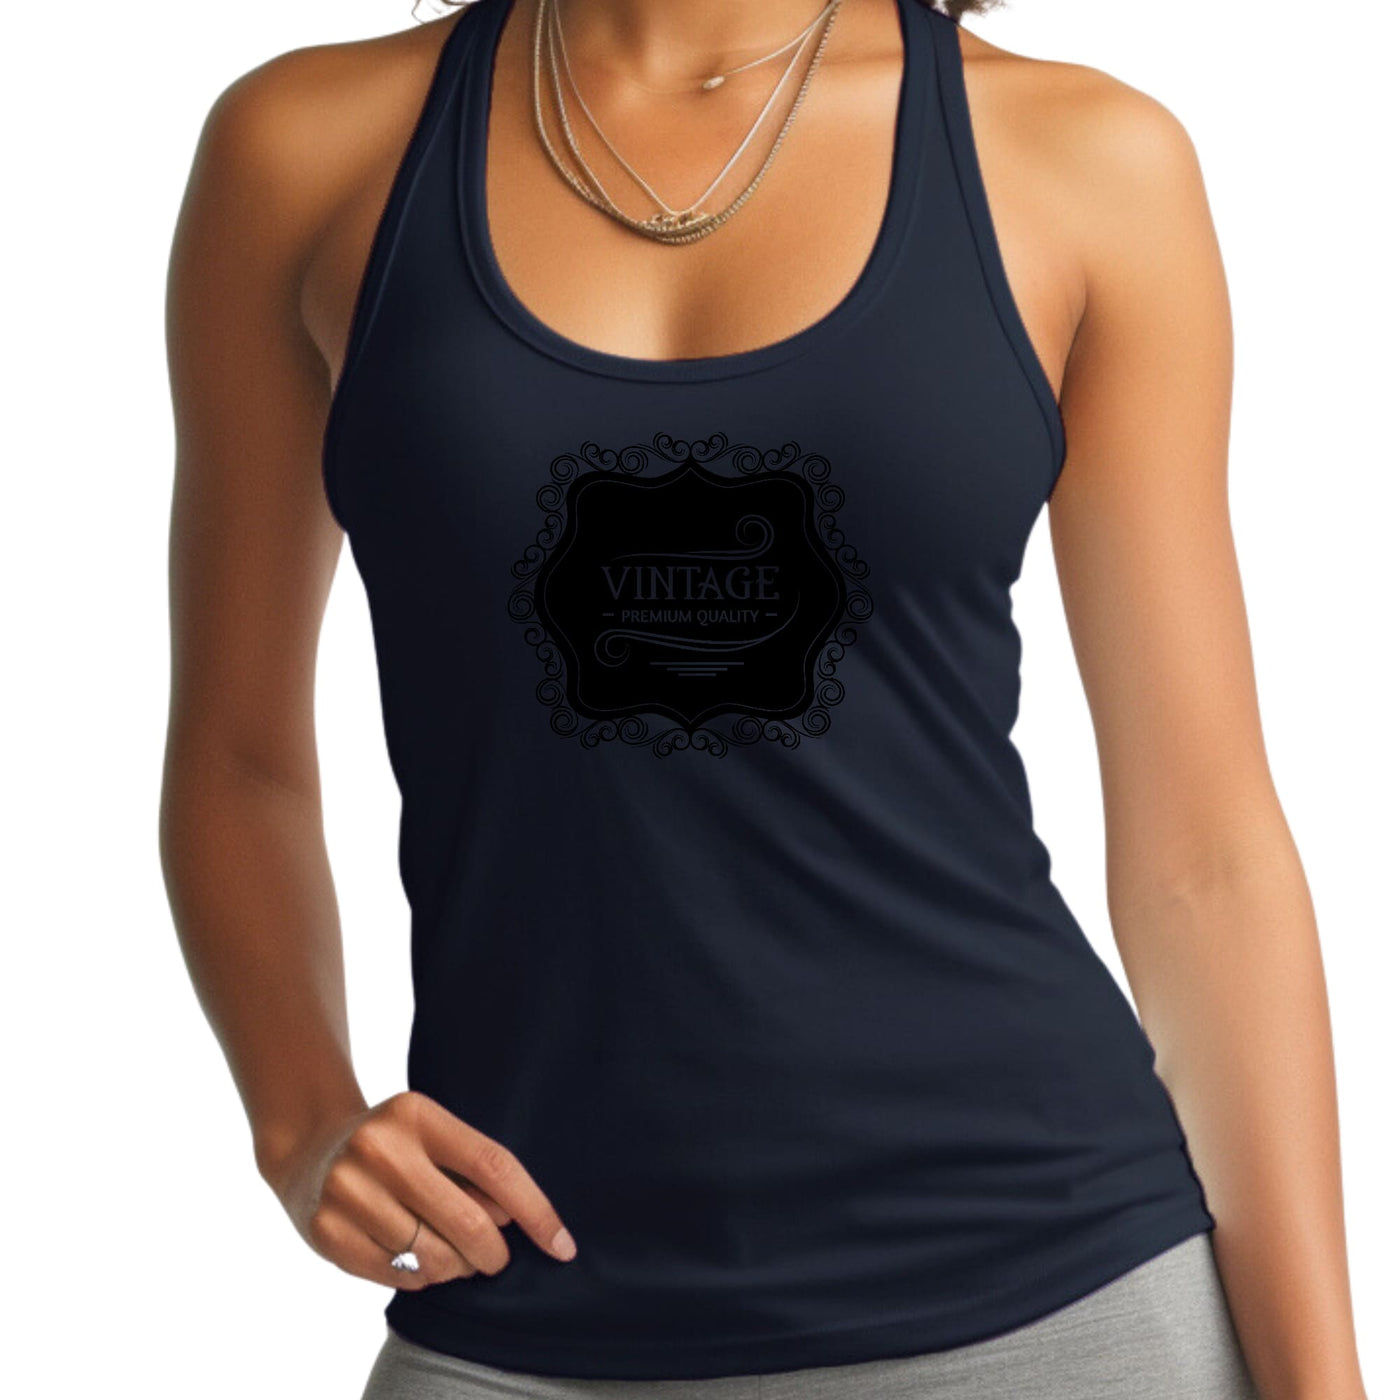 Womens Fitness Tank Top Graphic T-shirt Vintage Premium Quality Black - Womens